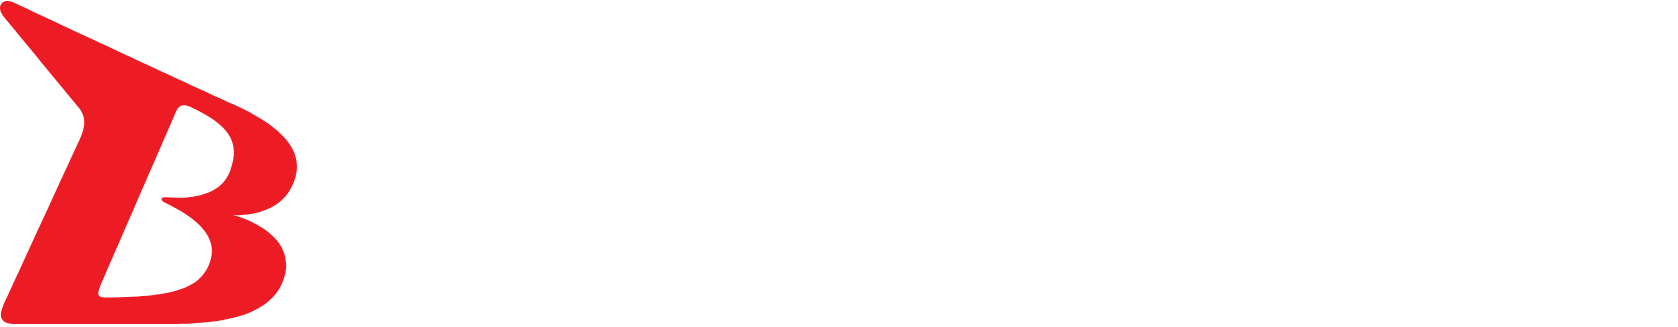 Bushiroad Logo groß für dunkle Hintergründe (transparentes PNG)